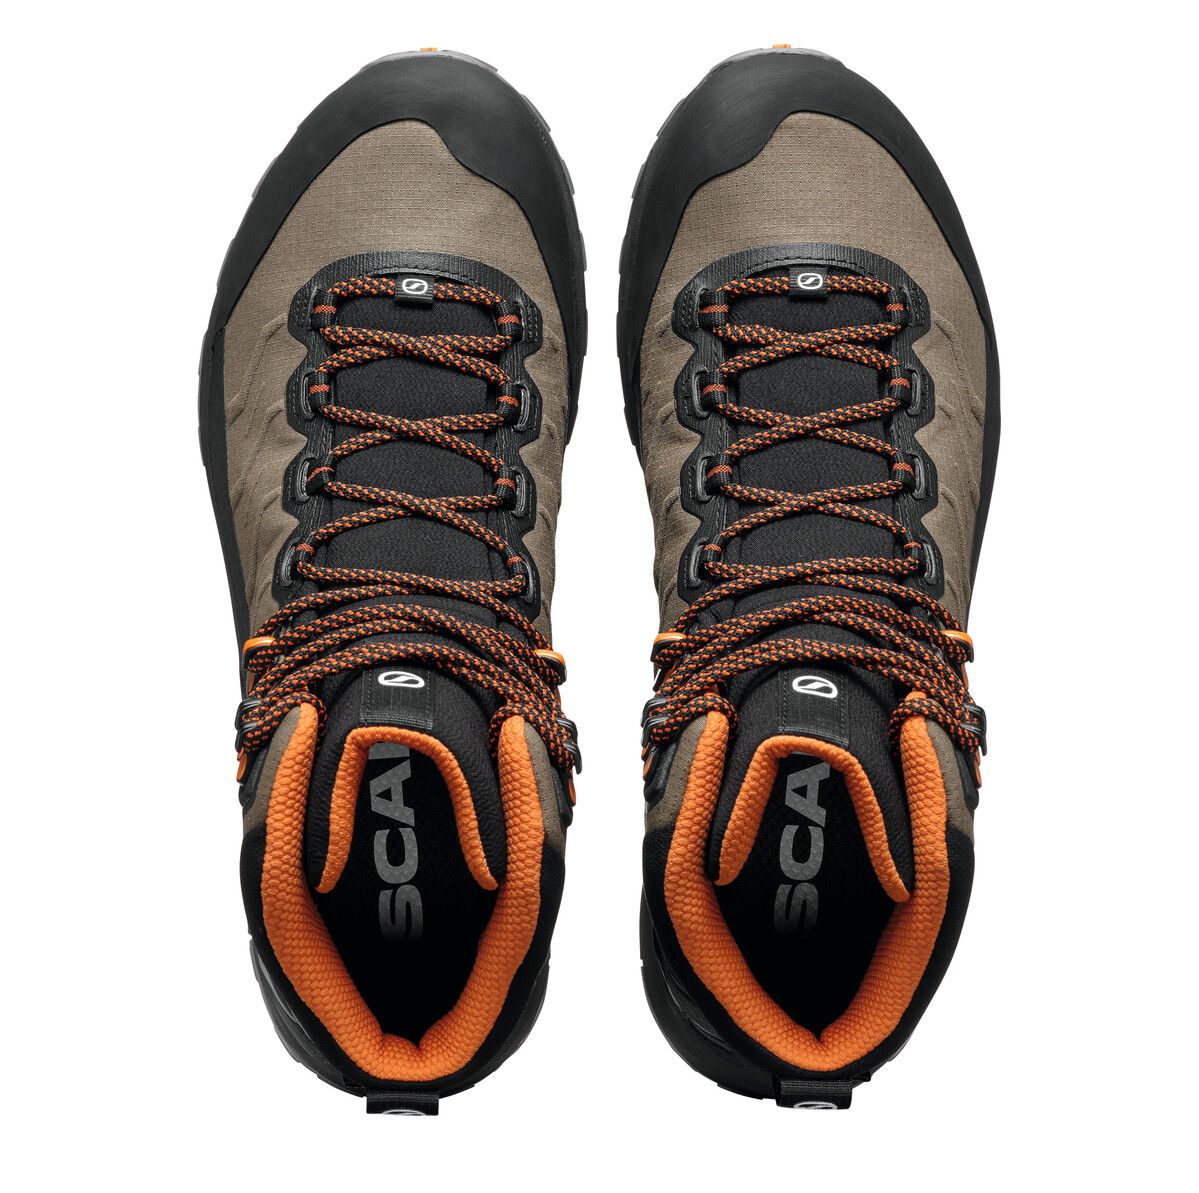 Scarpa Men's Rush Trek LT GTX Hiking Boots